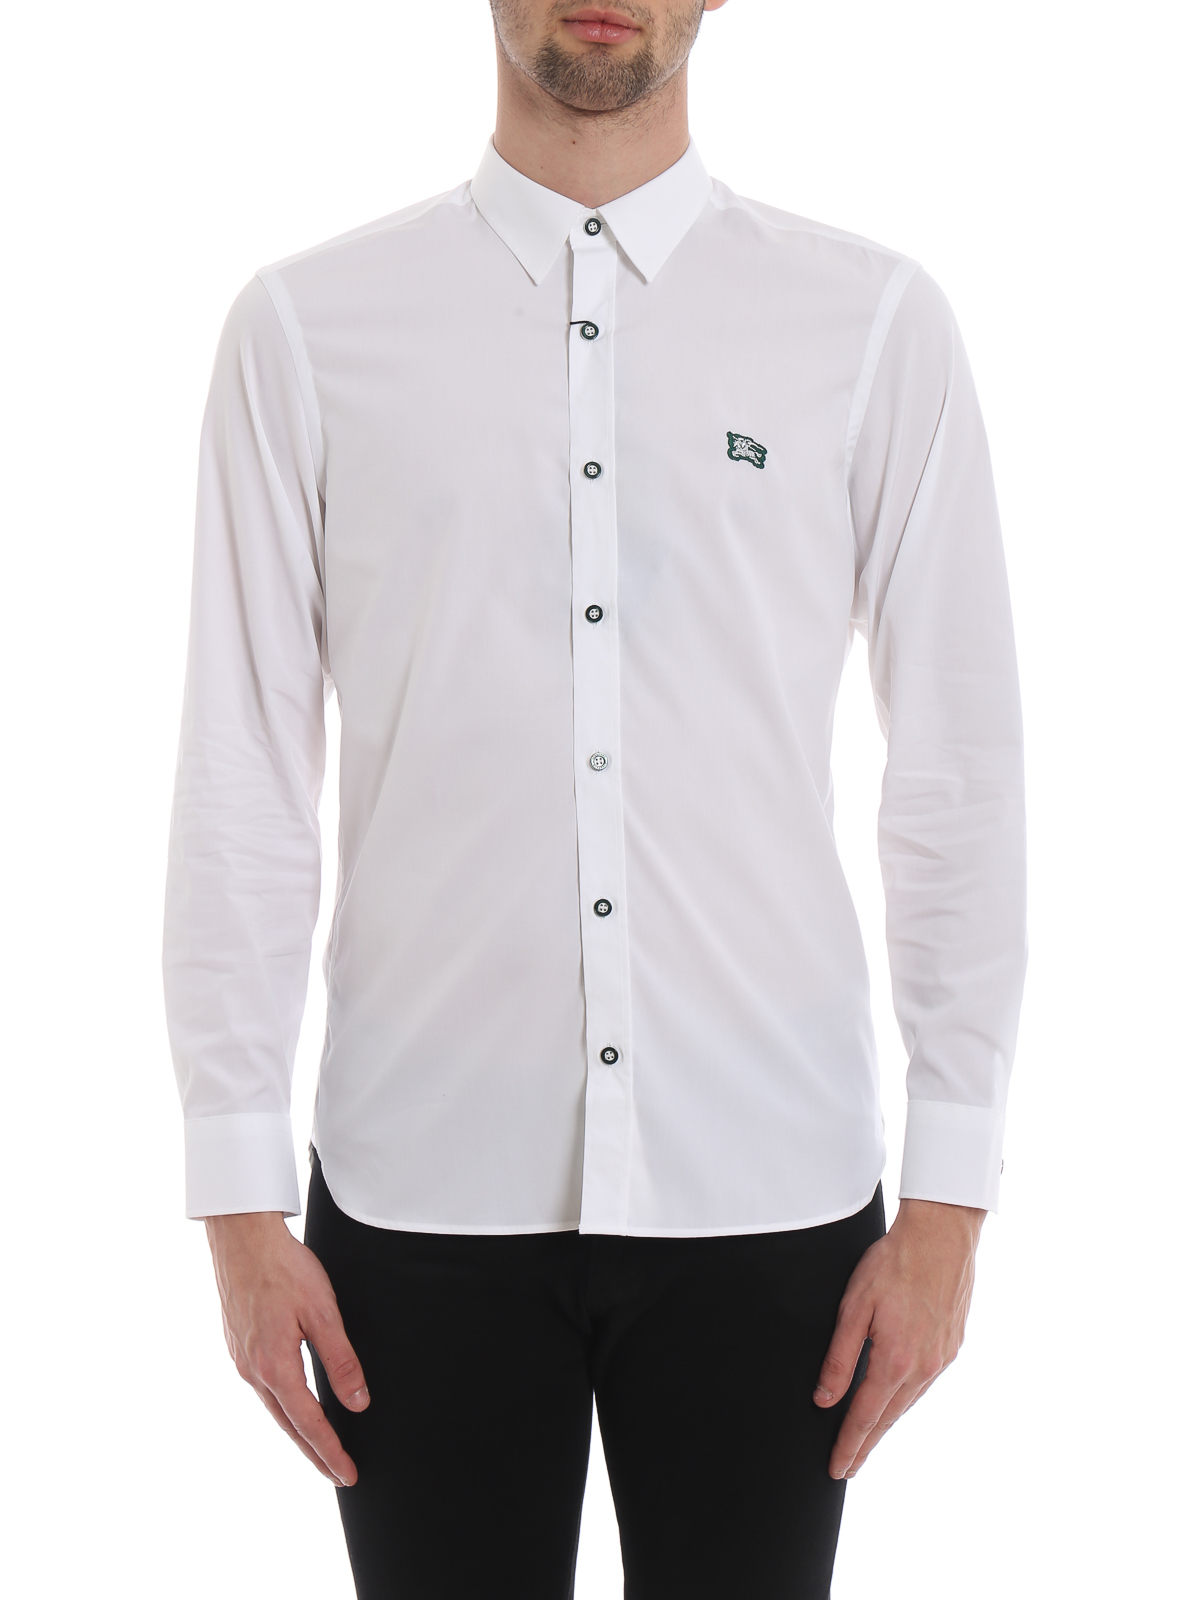 Shirts Burberry - William contrasting button shirt - 8004959 | iKRIX.com